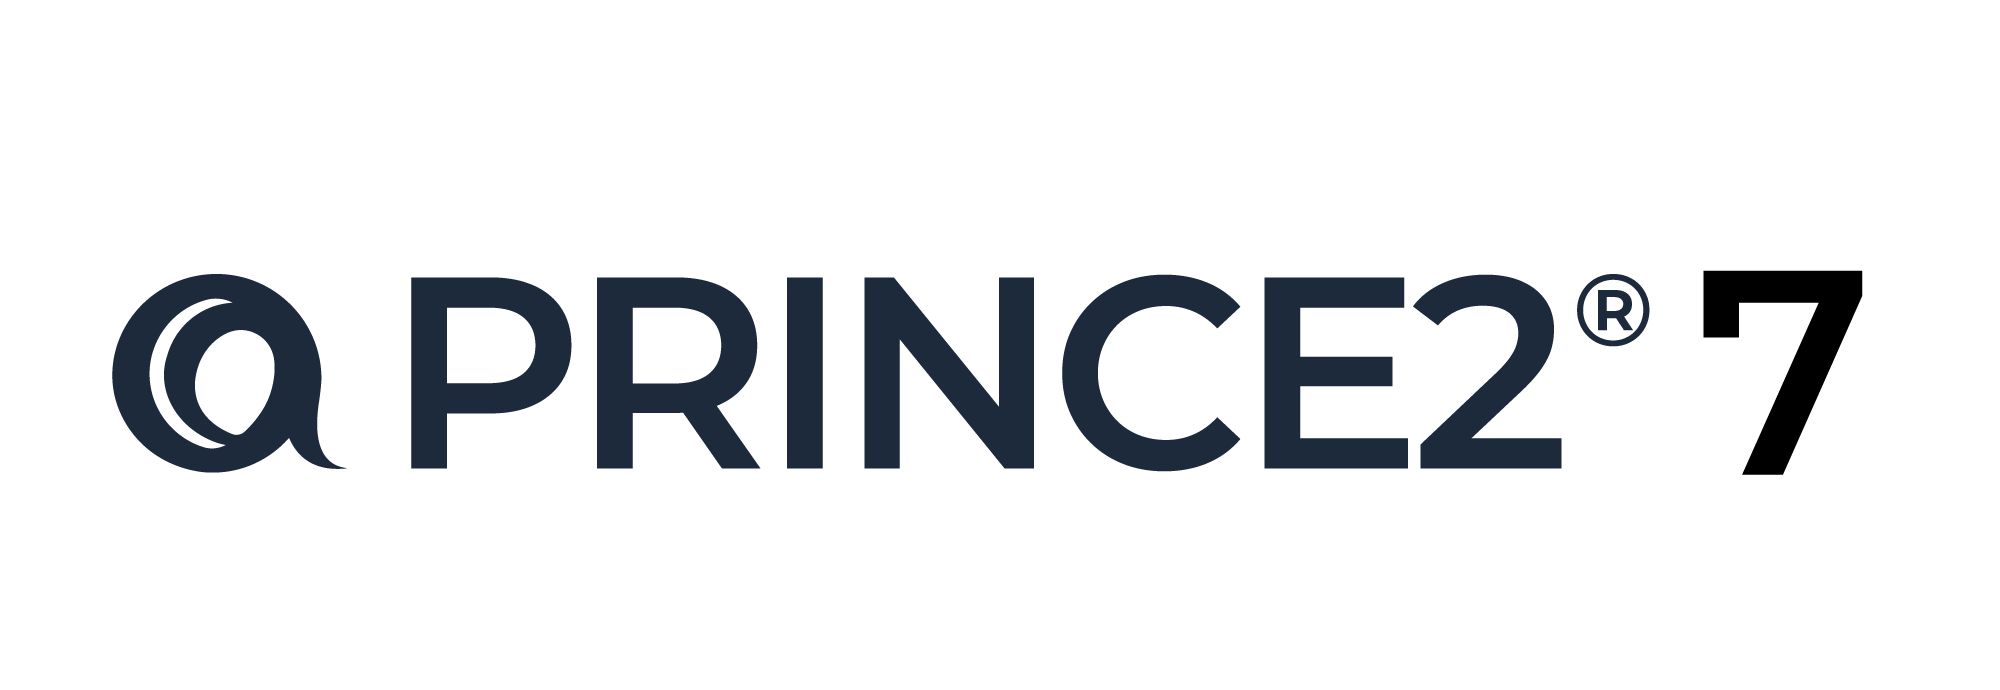 PRINCE2-7-logo-transparrant